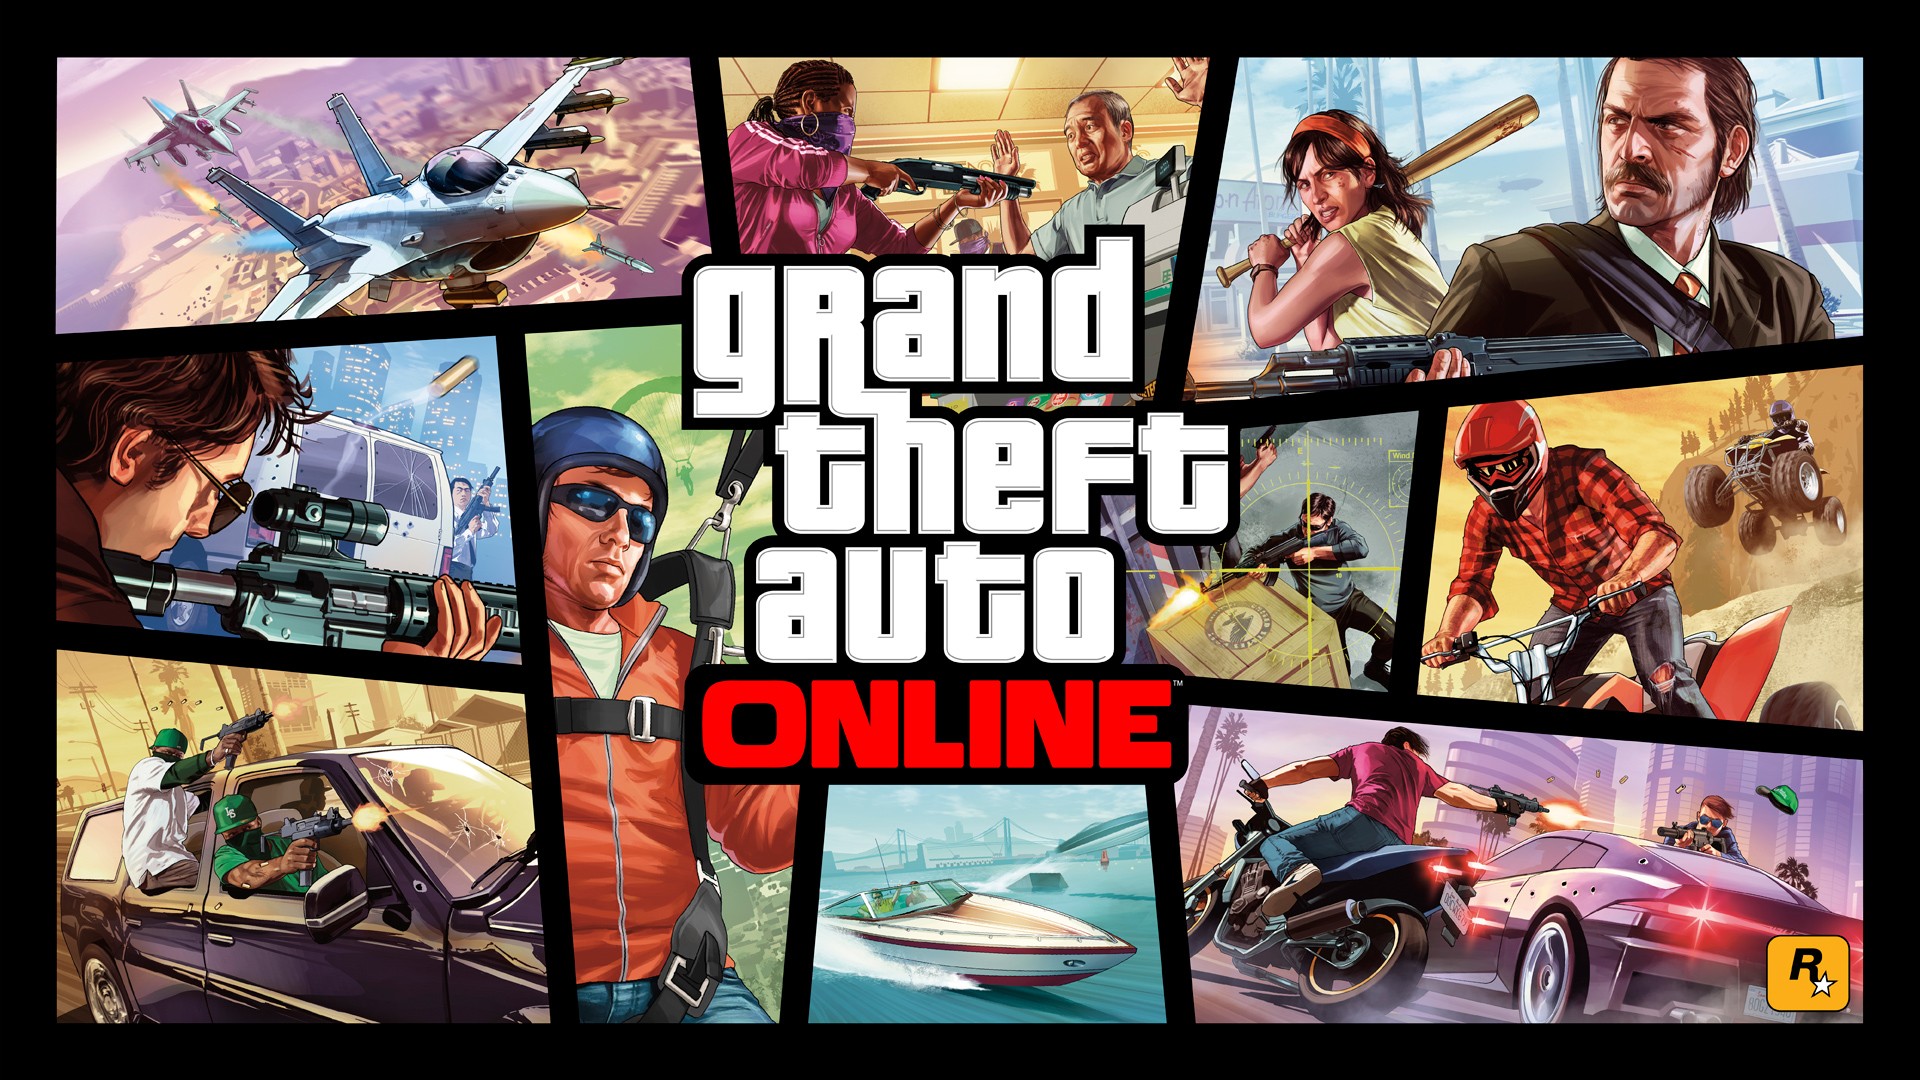 Grand Theft Auto V, Grand Theft Auto Online, Rockstar Games, Fan Art Wallpaper